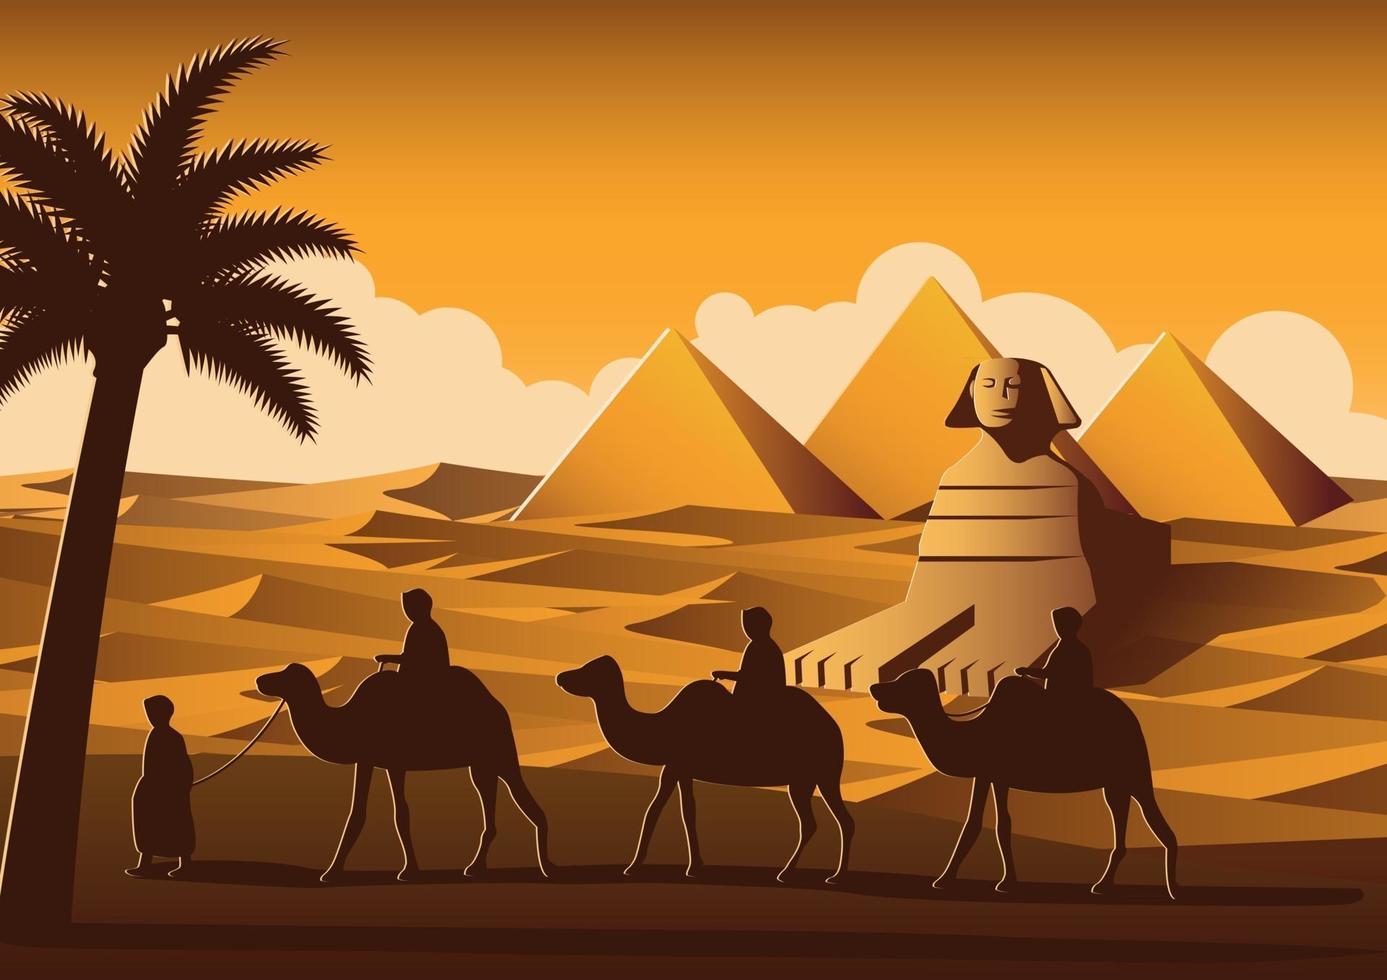 caravana da pirâmide camel pass vetor